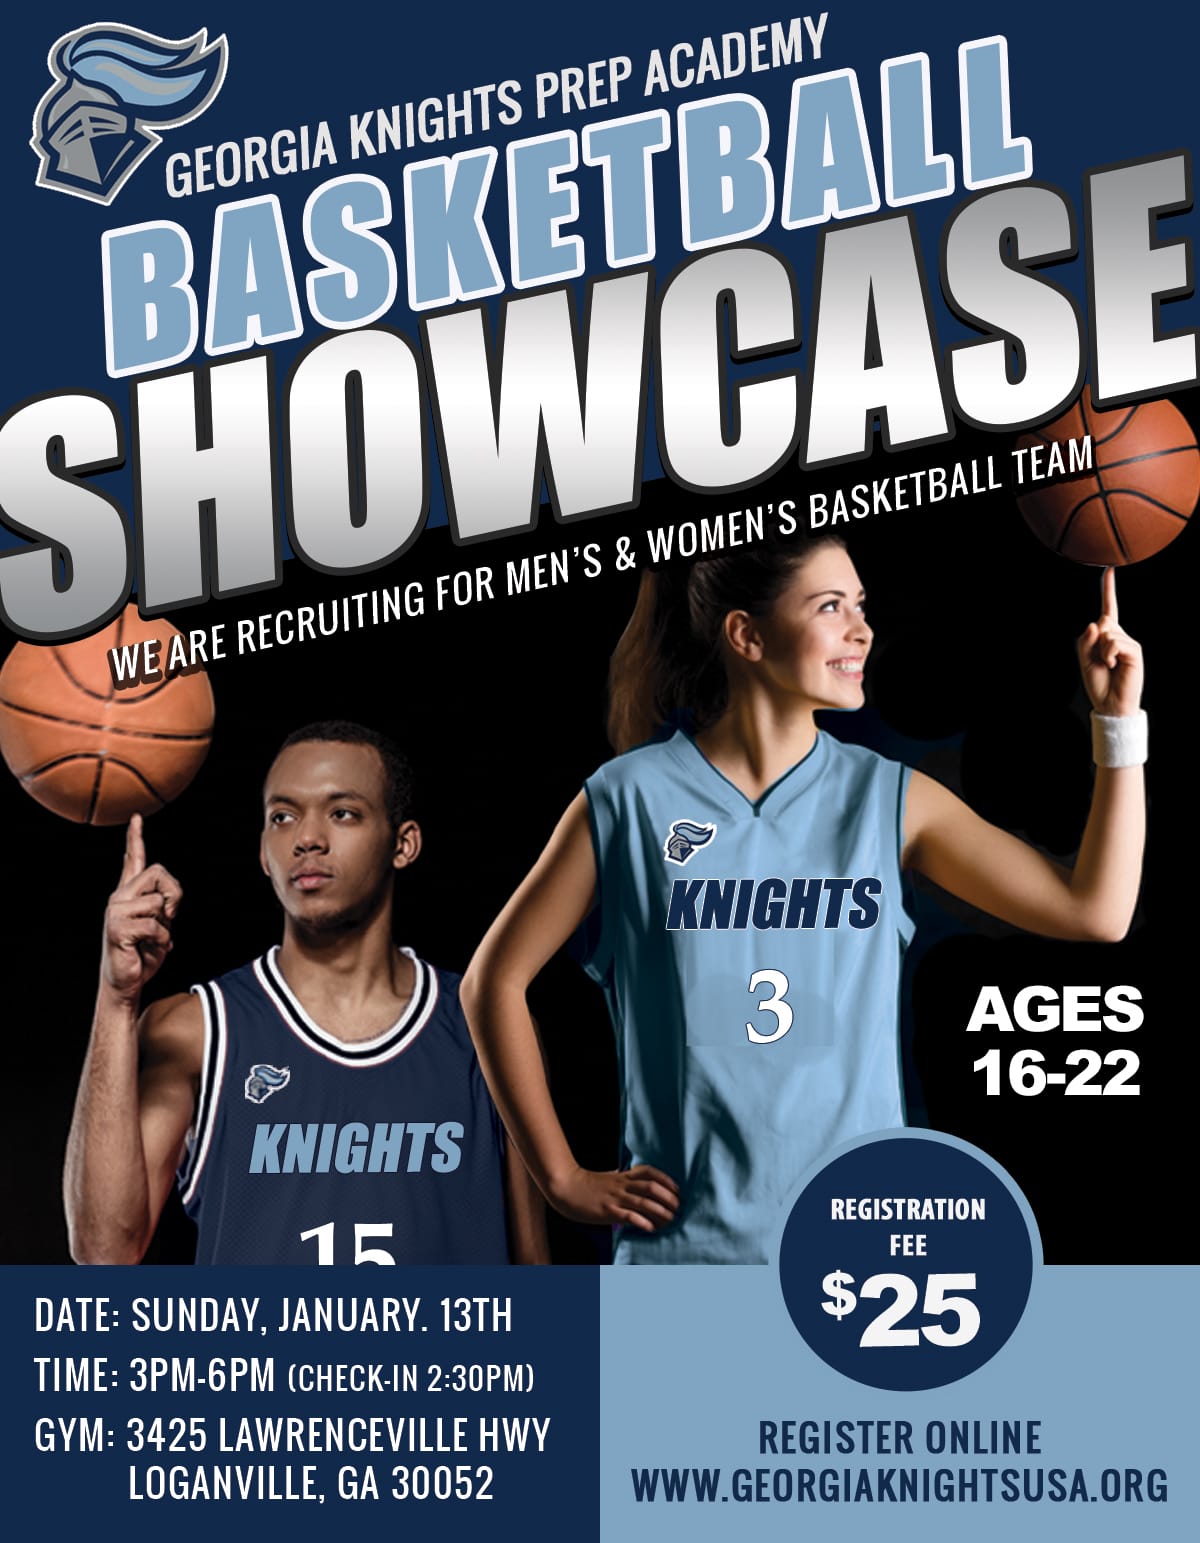 Georgia Knights Prep Academy Basketball Showcase Team Try-out - 13 Jan 2019